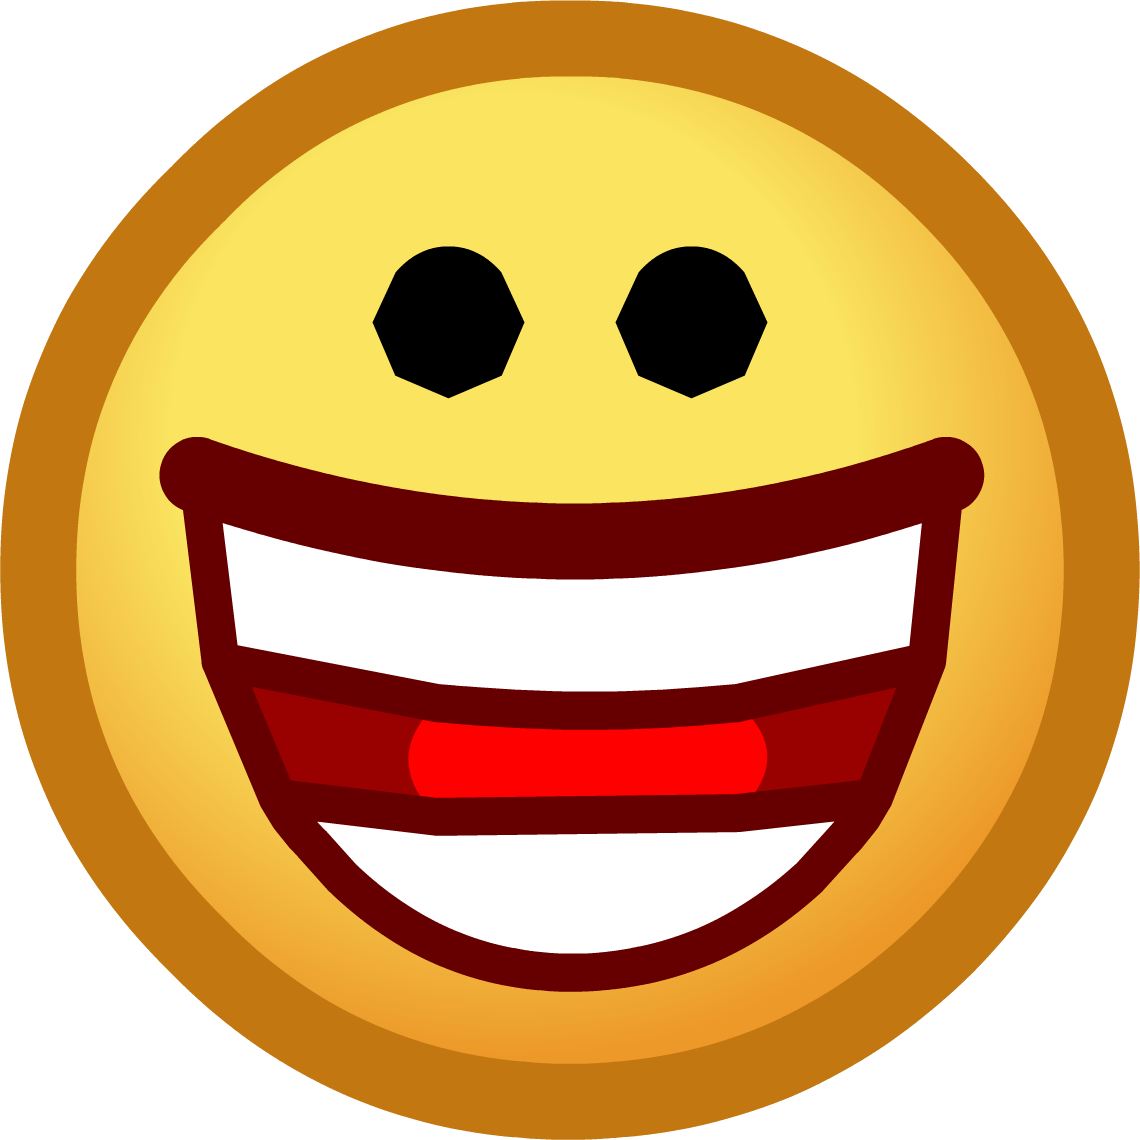 Smile Imagen de PNG de la cara Emojinn de alta calidad